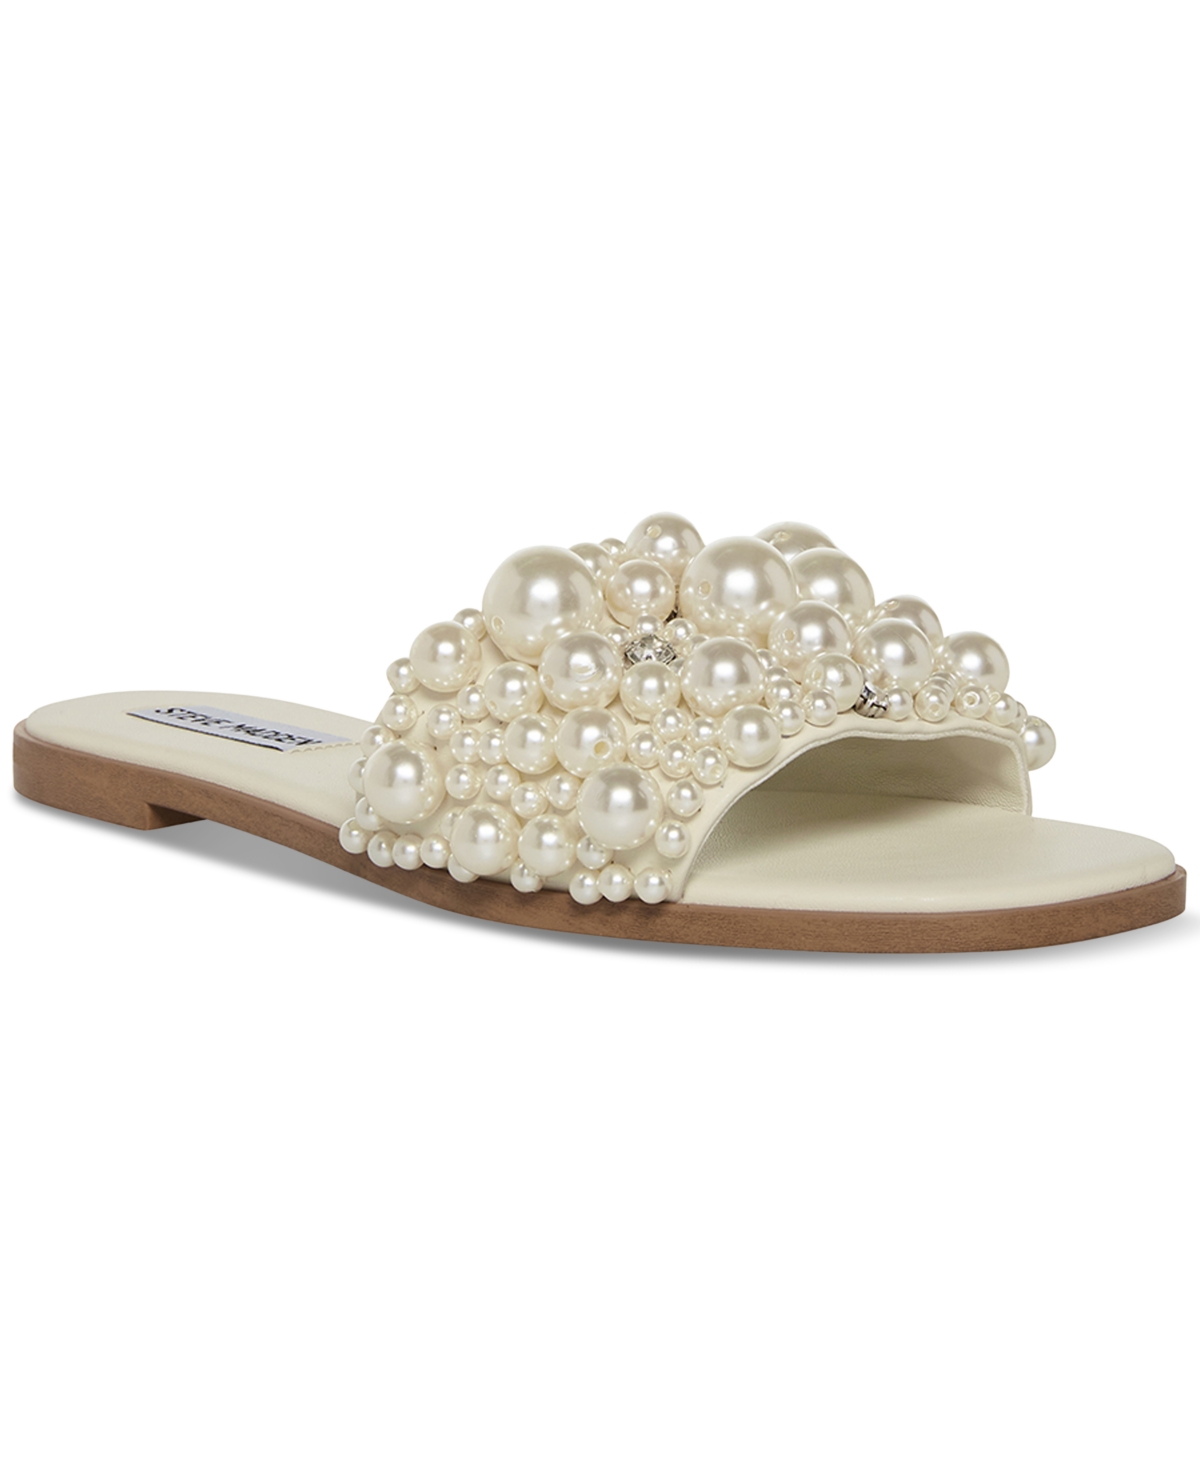 Women's Knicky Embellished Slide Sandals - White Pearl Multi